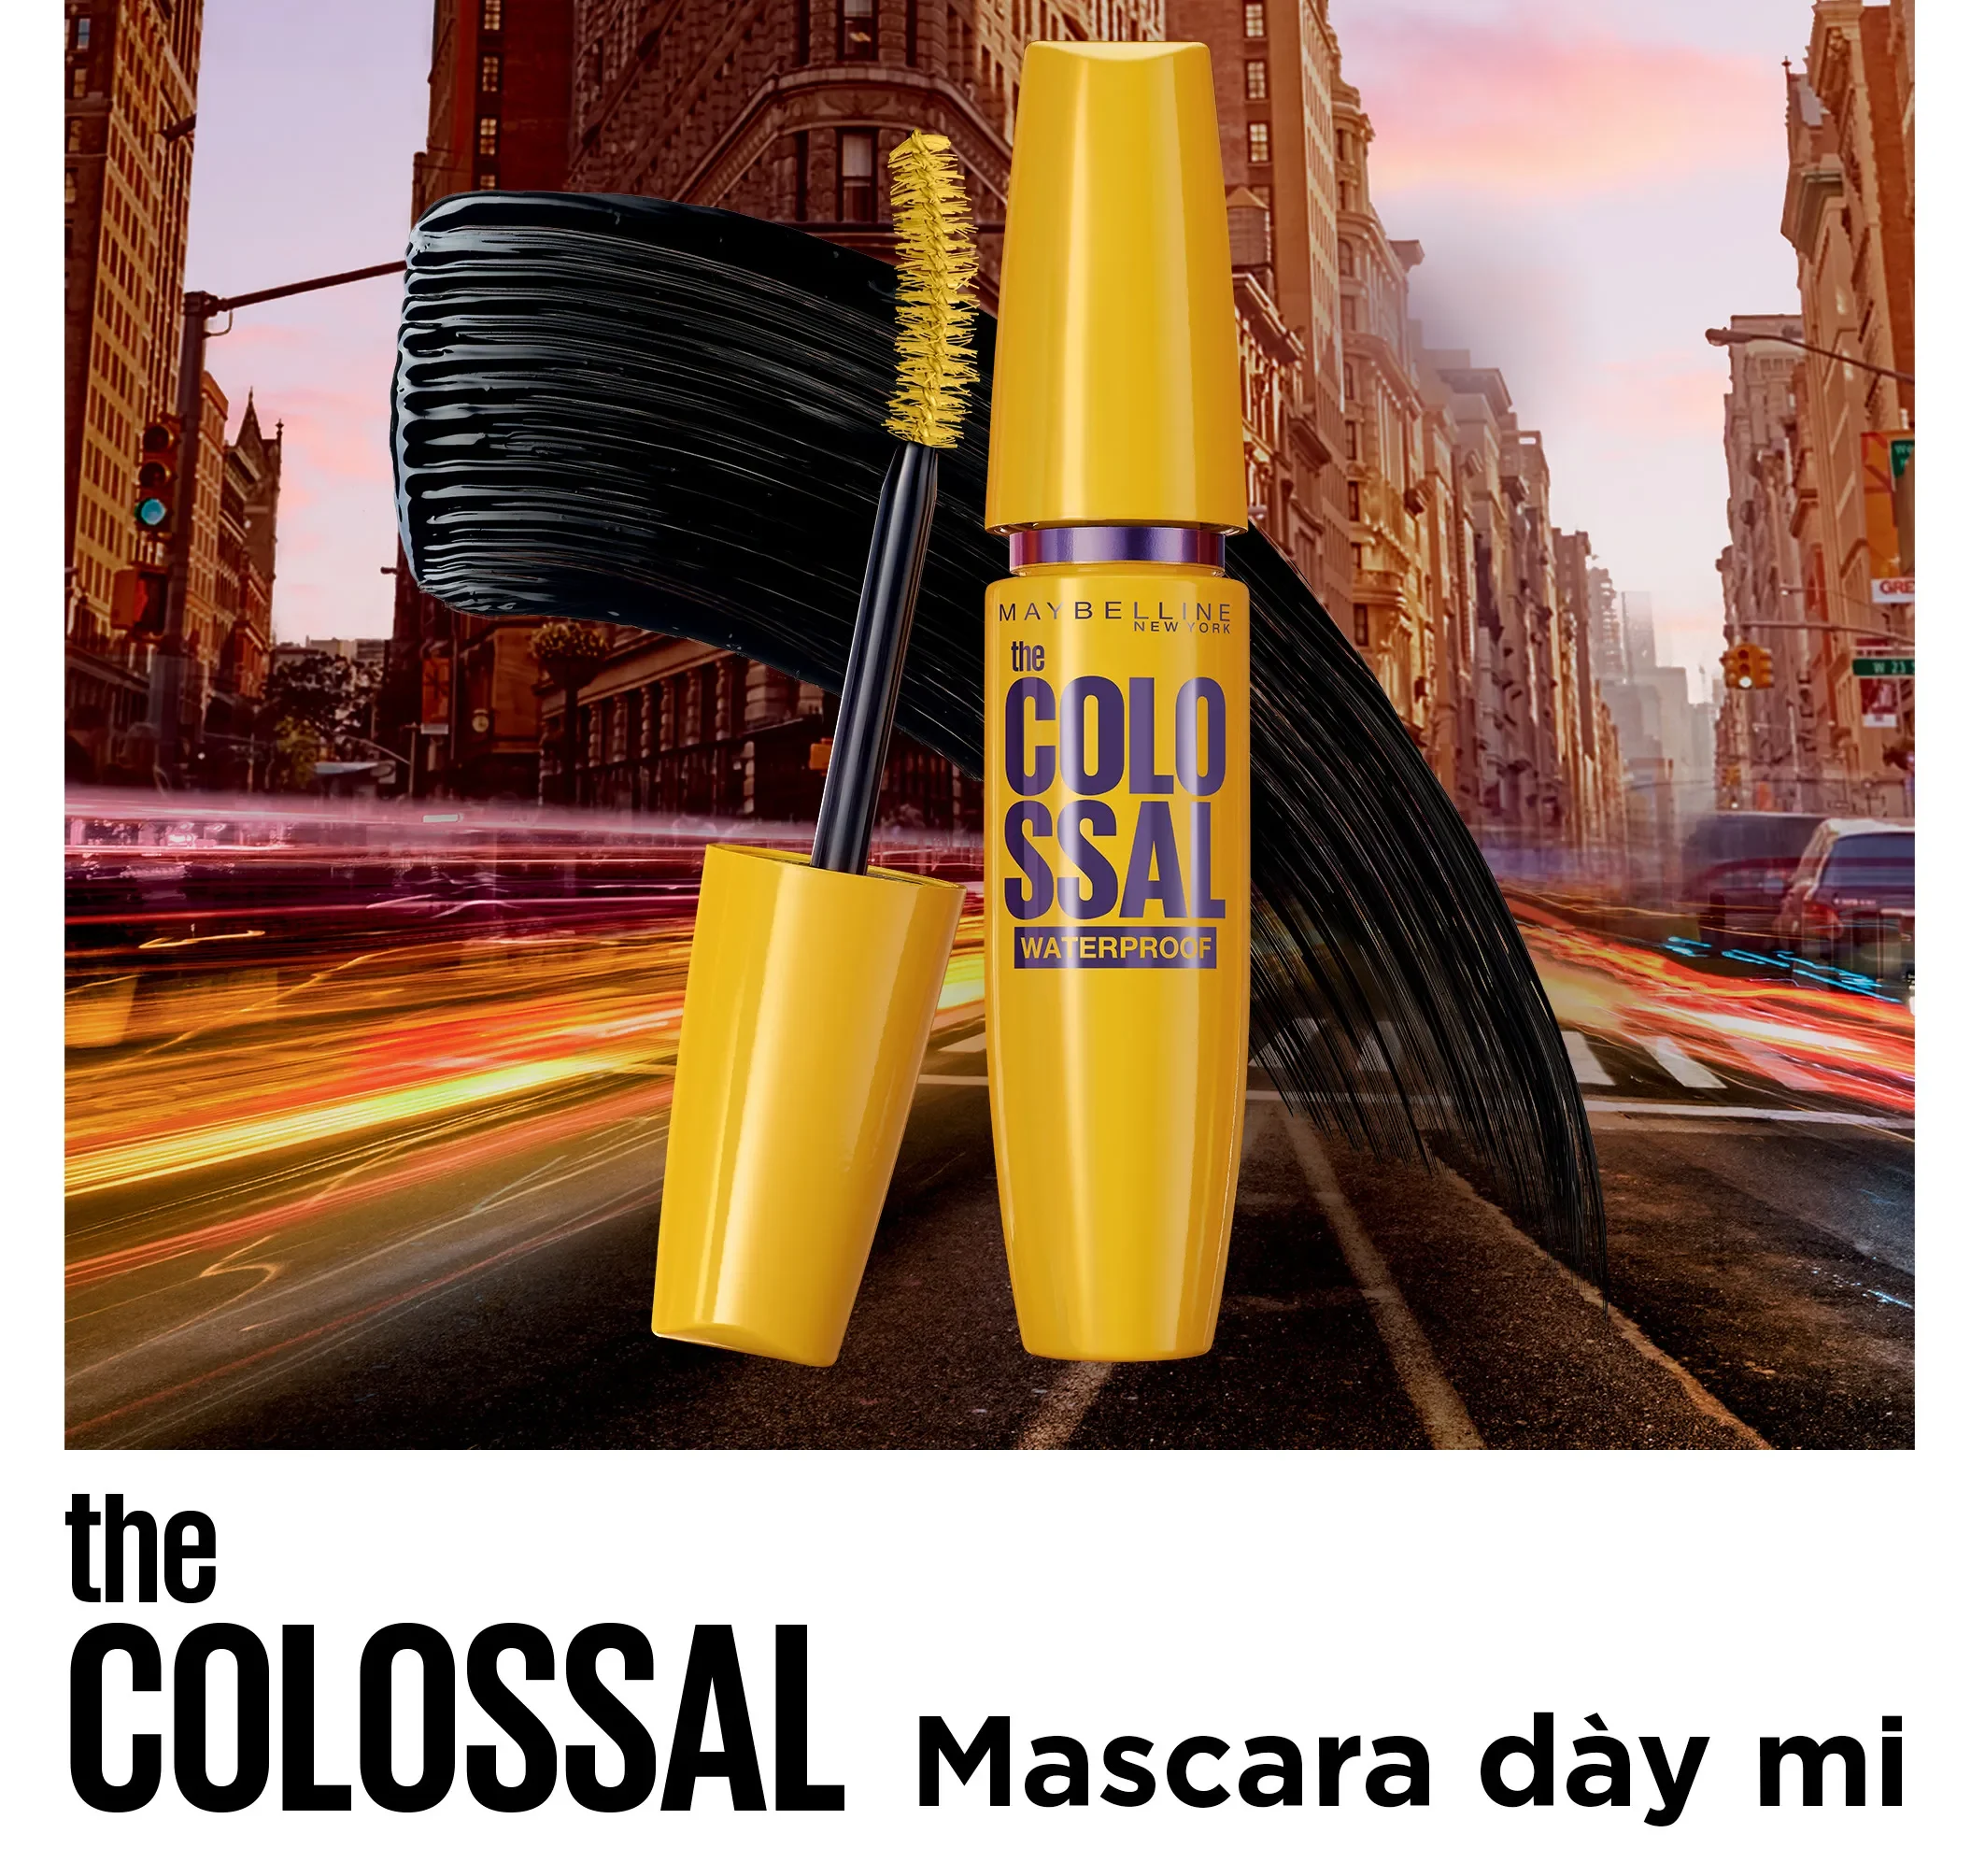 Mascara Duong Mi Collagen Day Mi gap 10 lan Maybelline3 e1703748219802